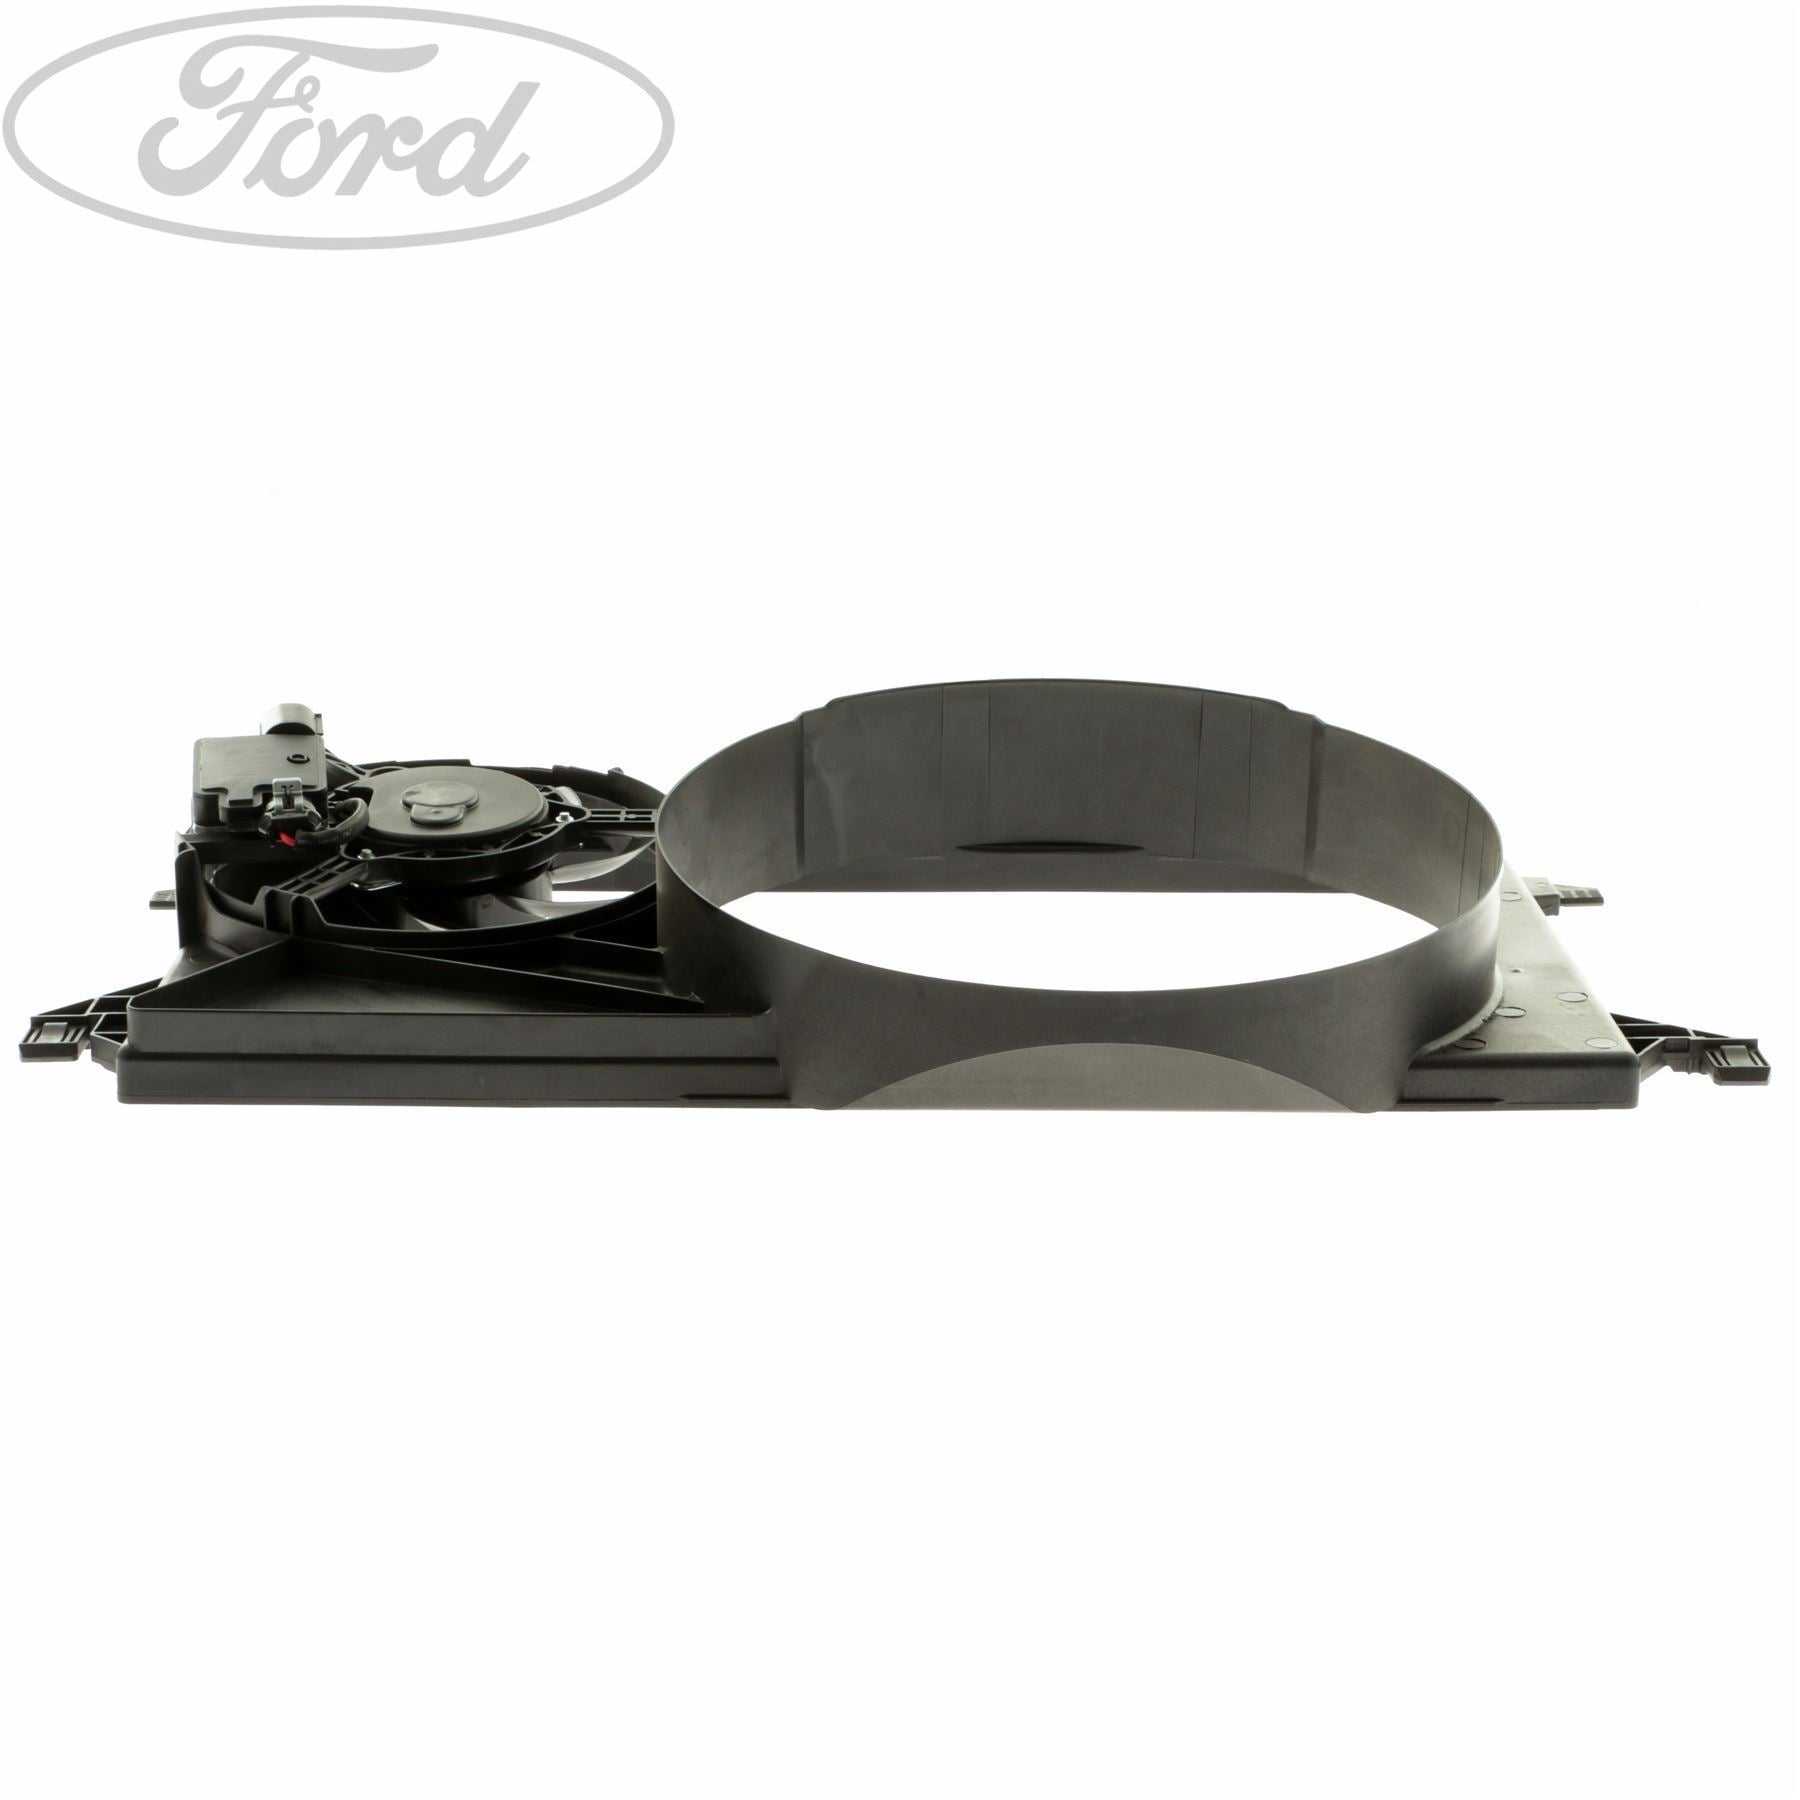 Ford, TRANSIT 2.2 TDCI ENGINE COOLING FAN & MOTOR RWD 4WD